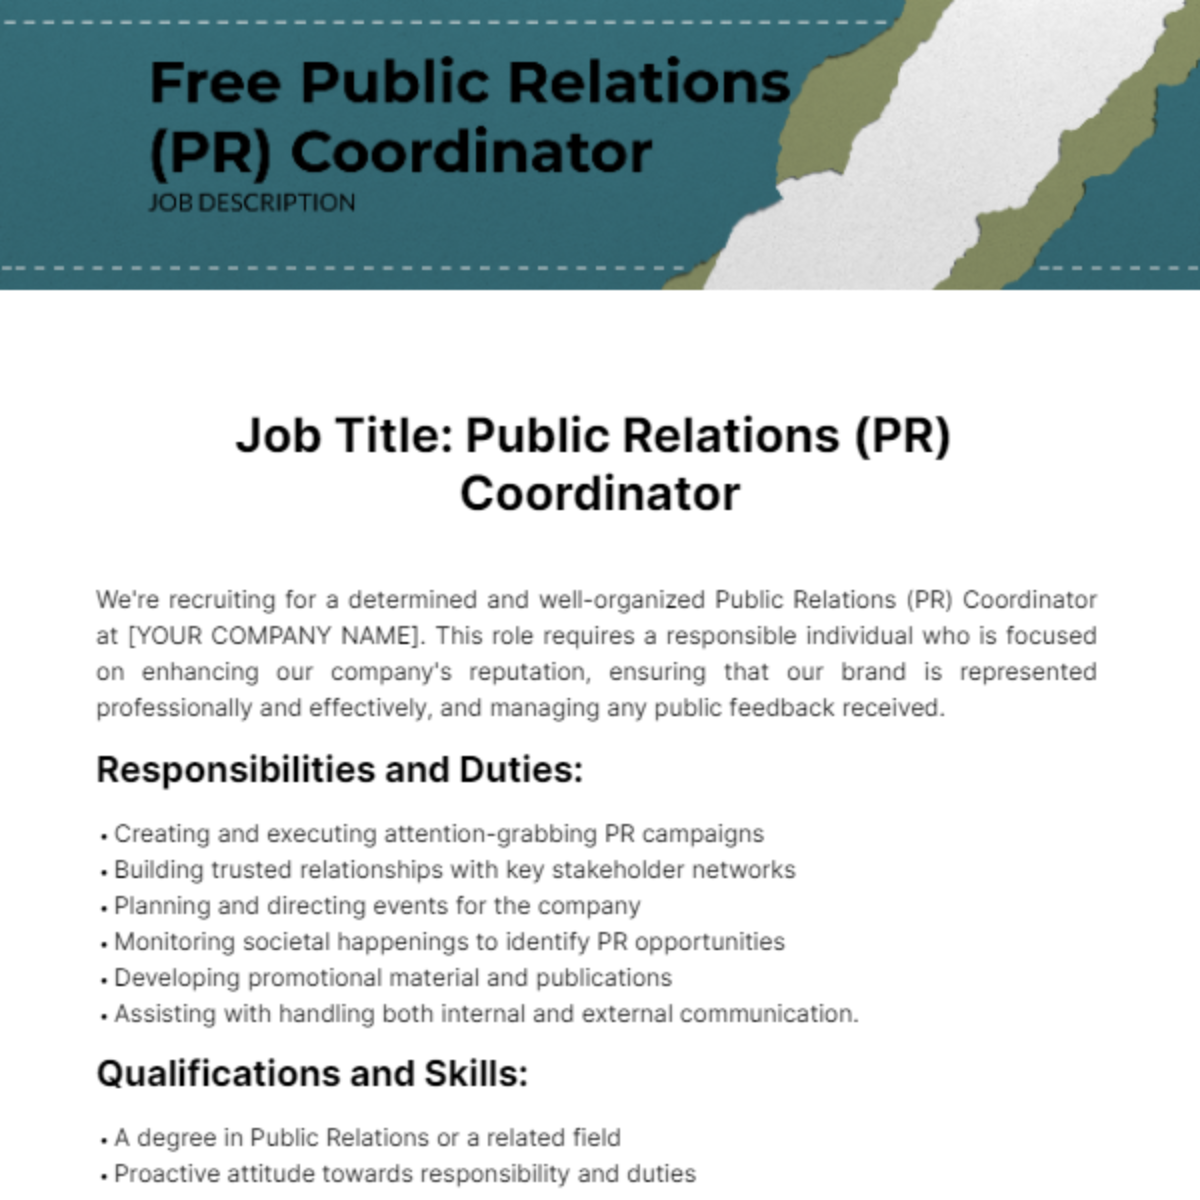 Public Relations (PR) Coordinator Job Description Template